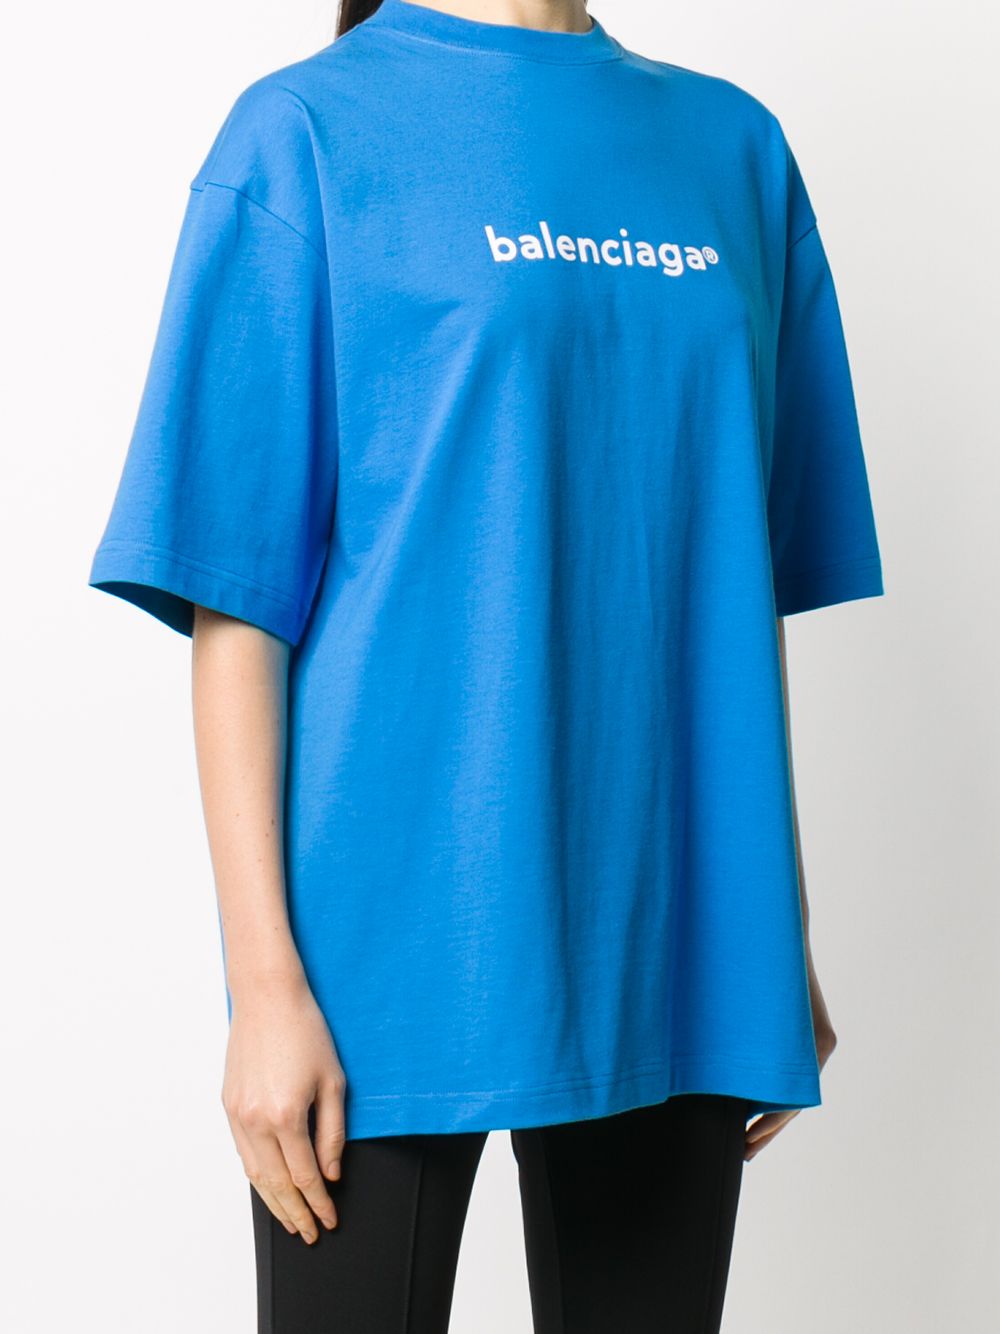 фото Balenciaga футболка свободного кроя